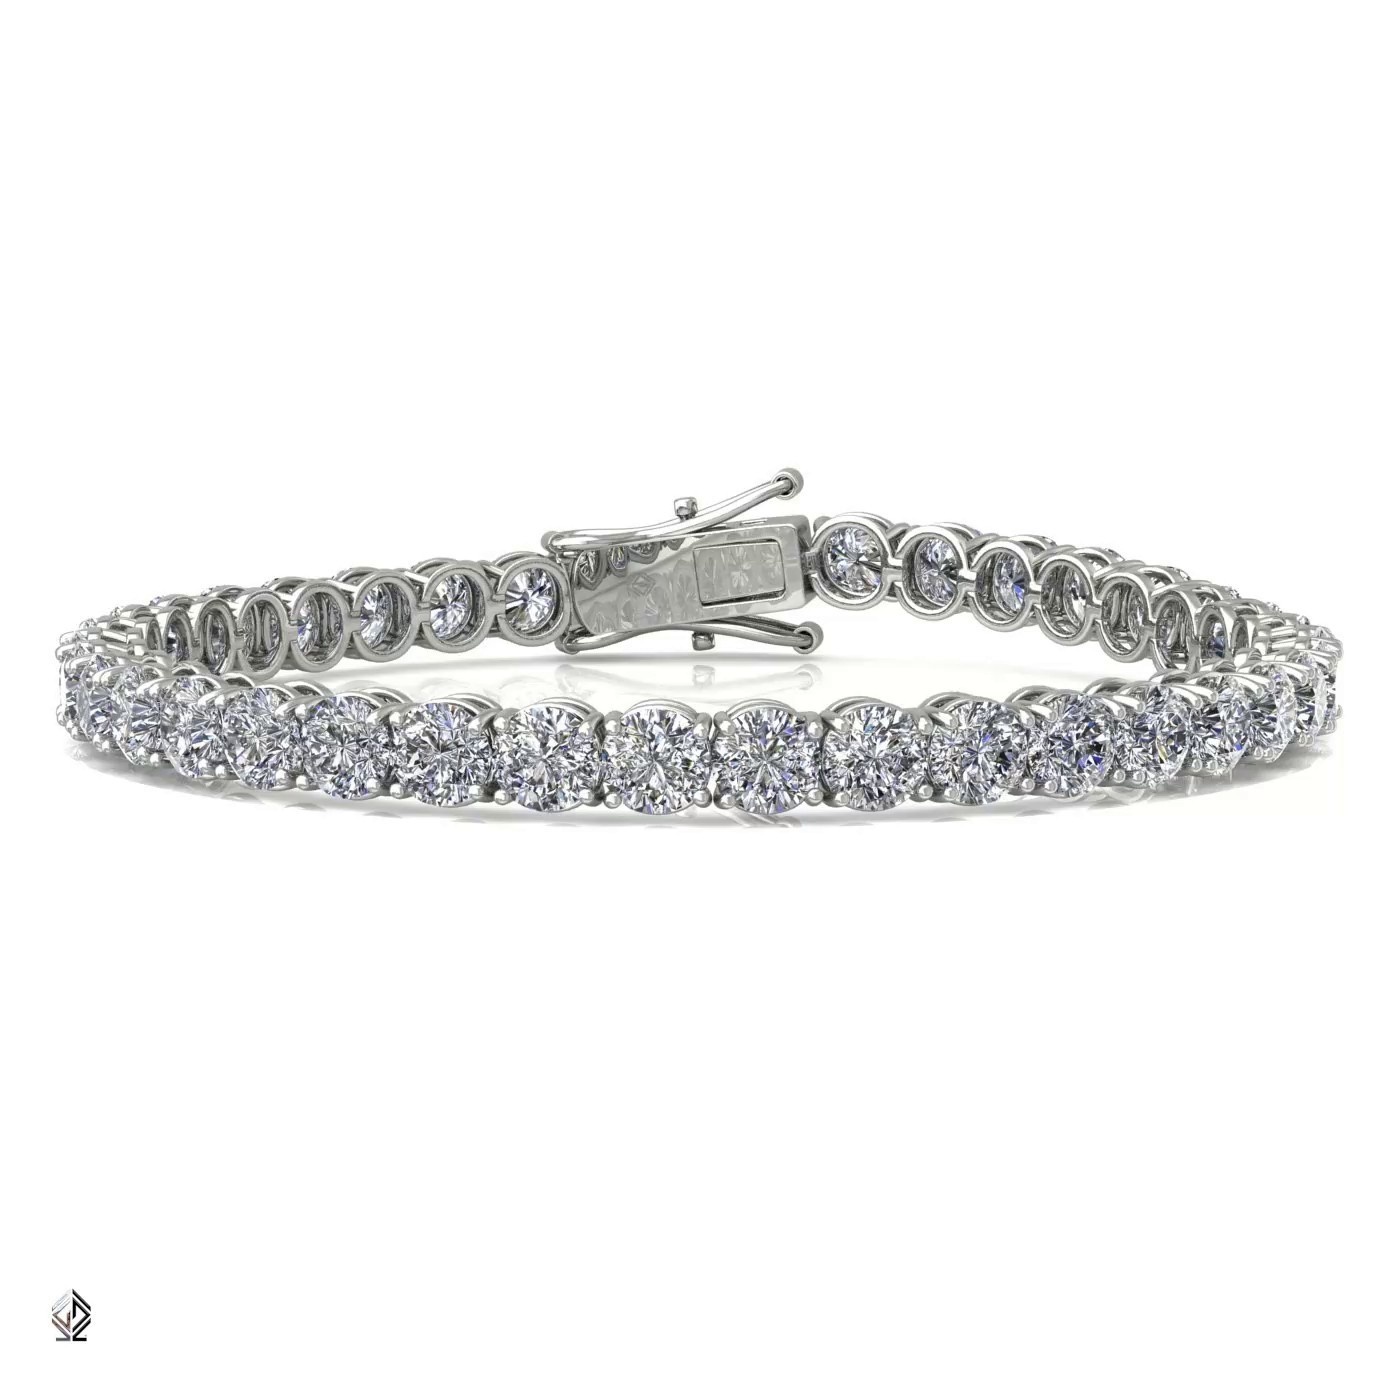 18k white gold 2.4mm 4 prong round shape diamond tennis bracelet in round setting Photos & images